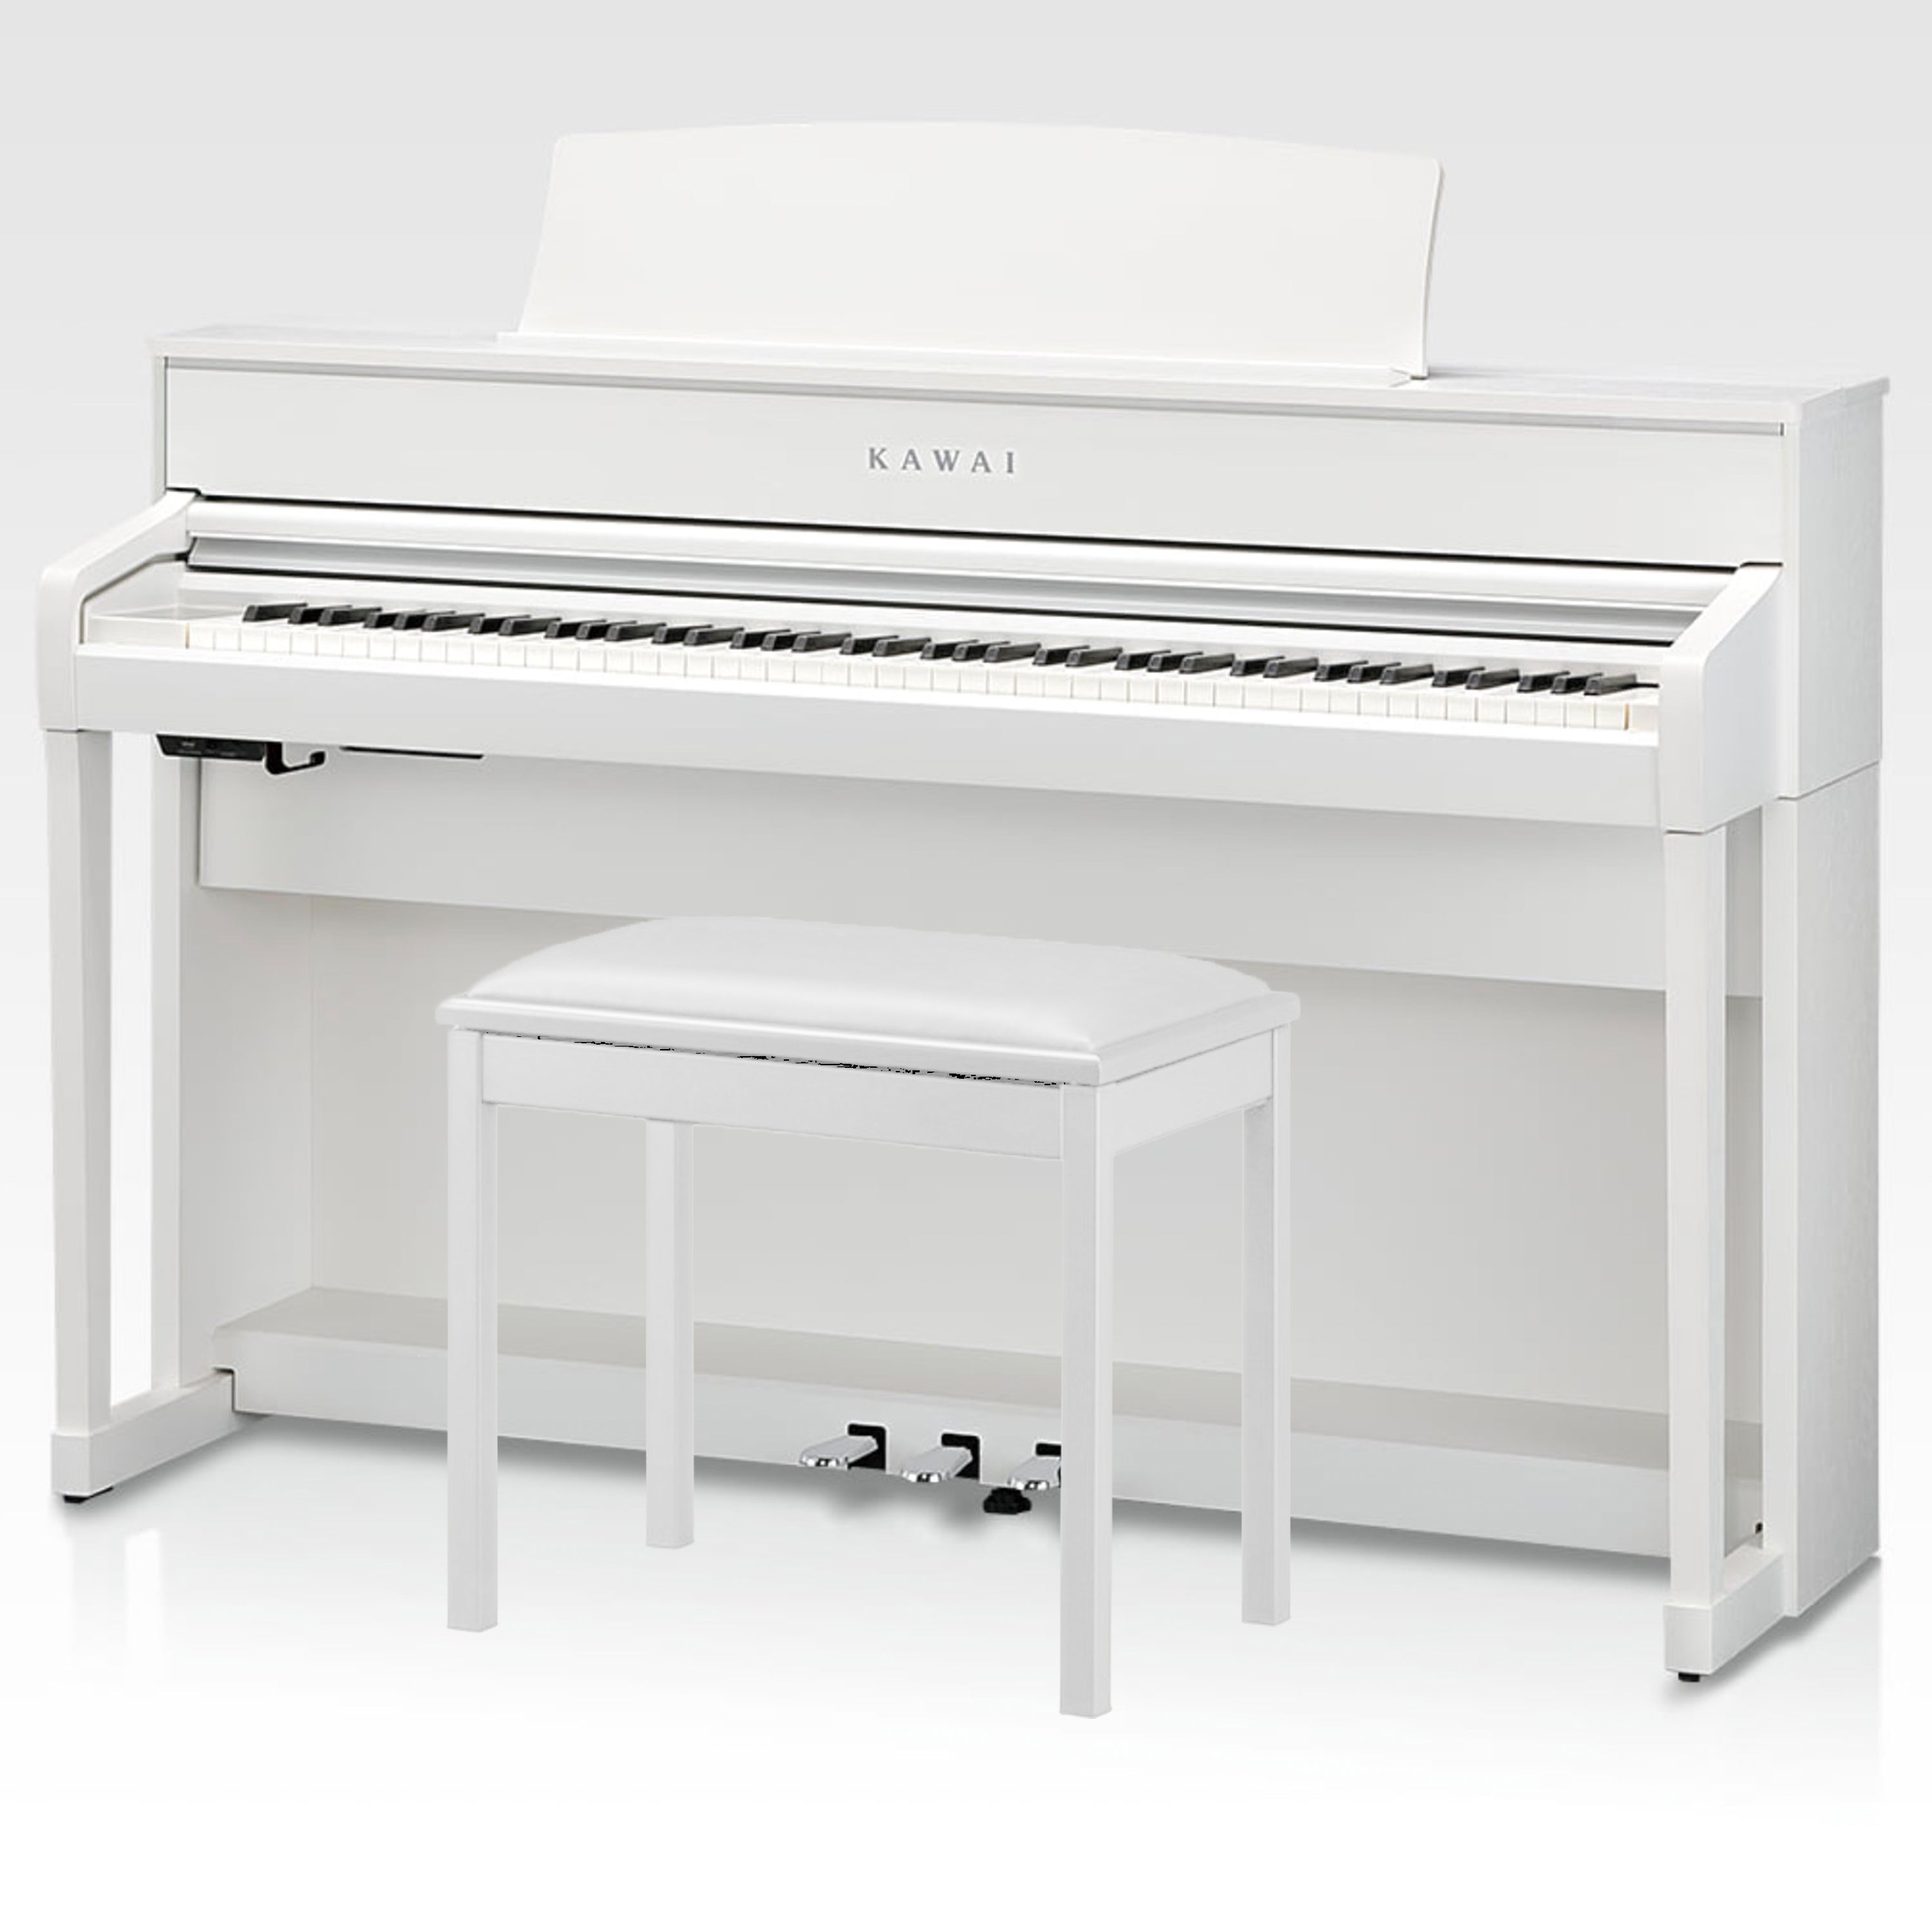 Kawai CA701 Digital Piano - Satin White - with bench